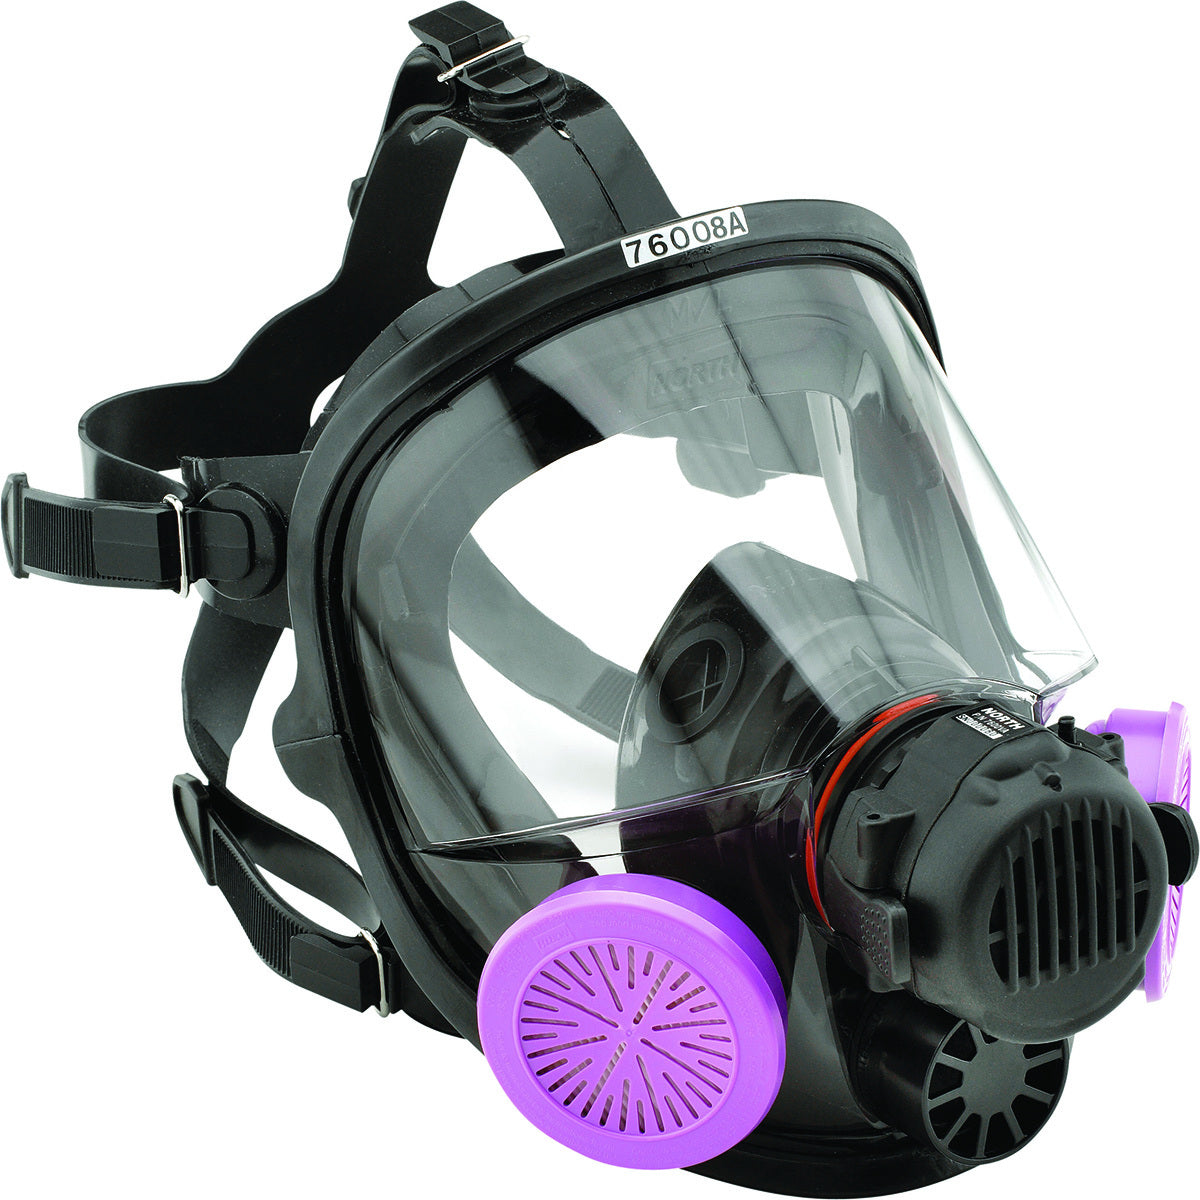 North 7600 Series Full Face Respirator